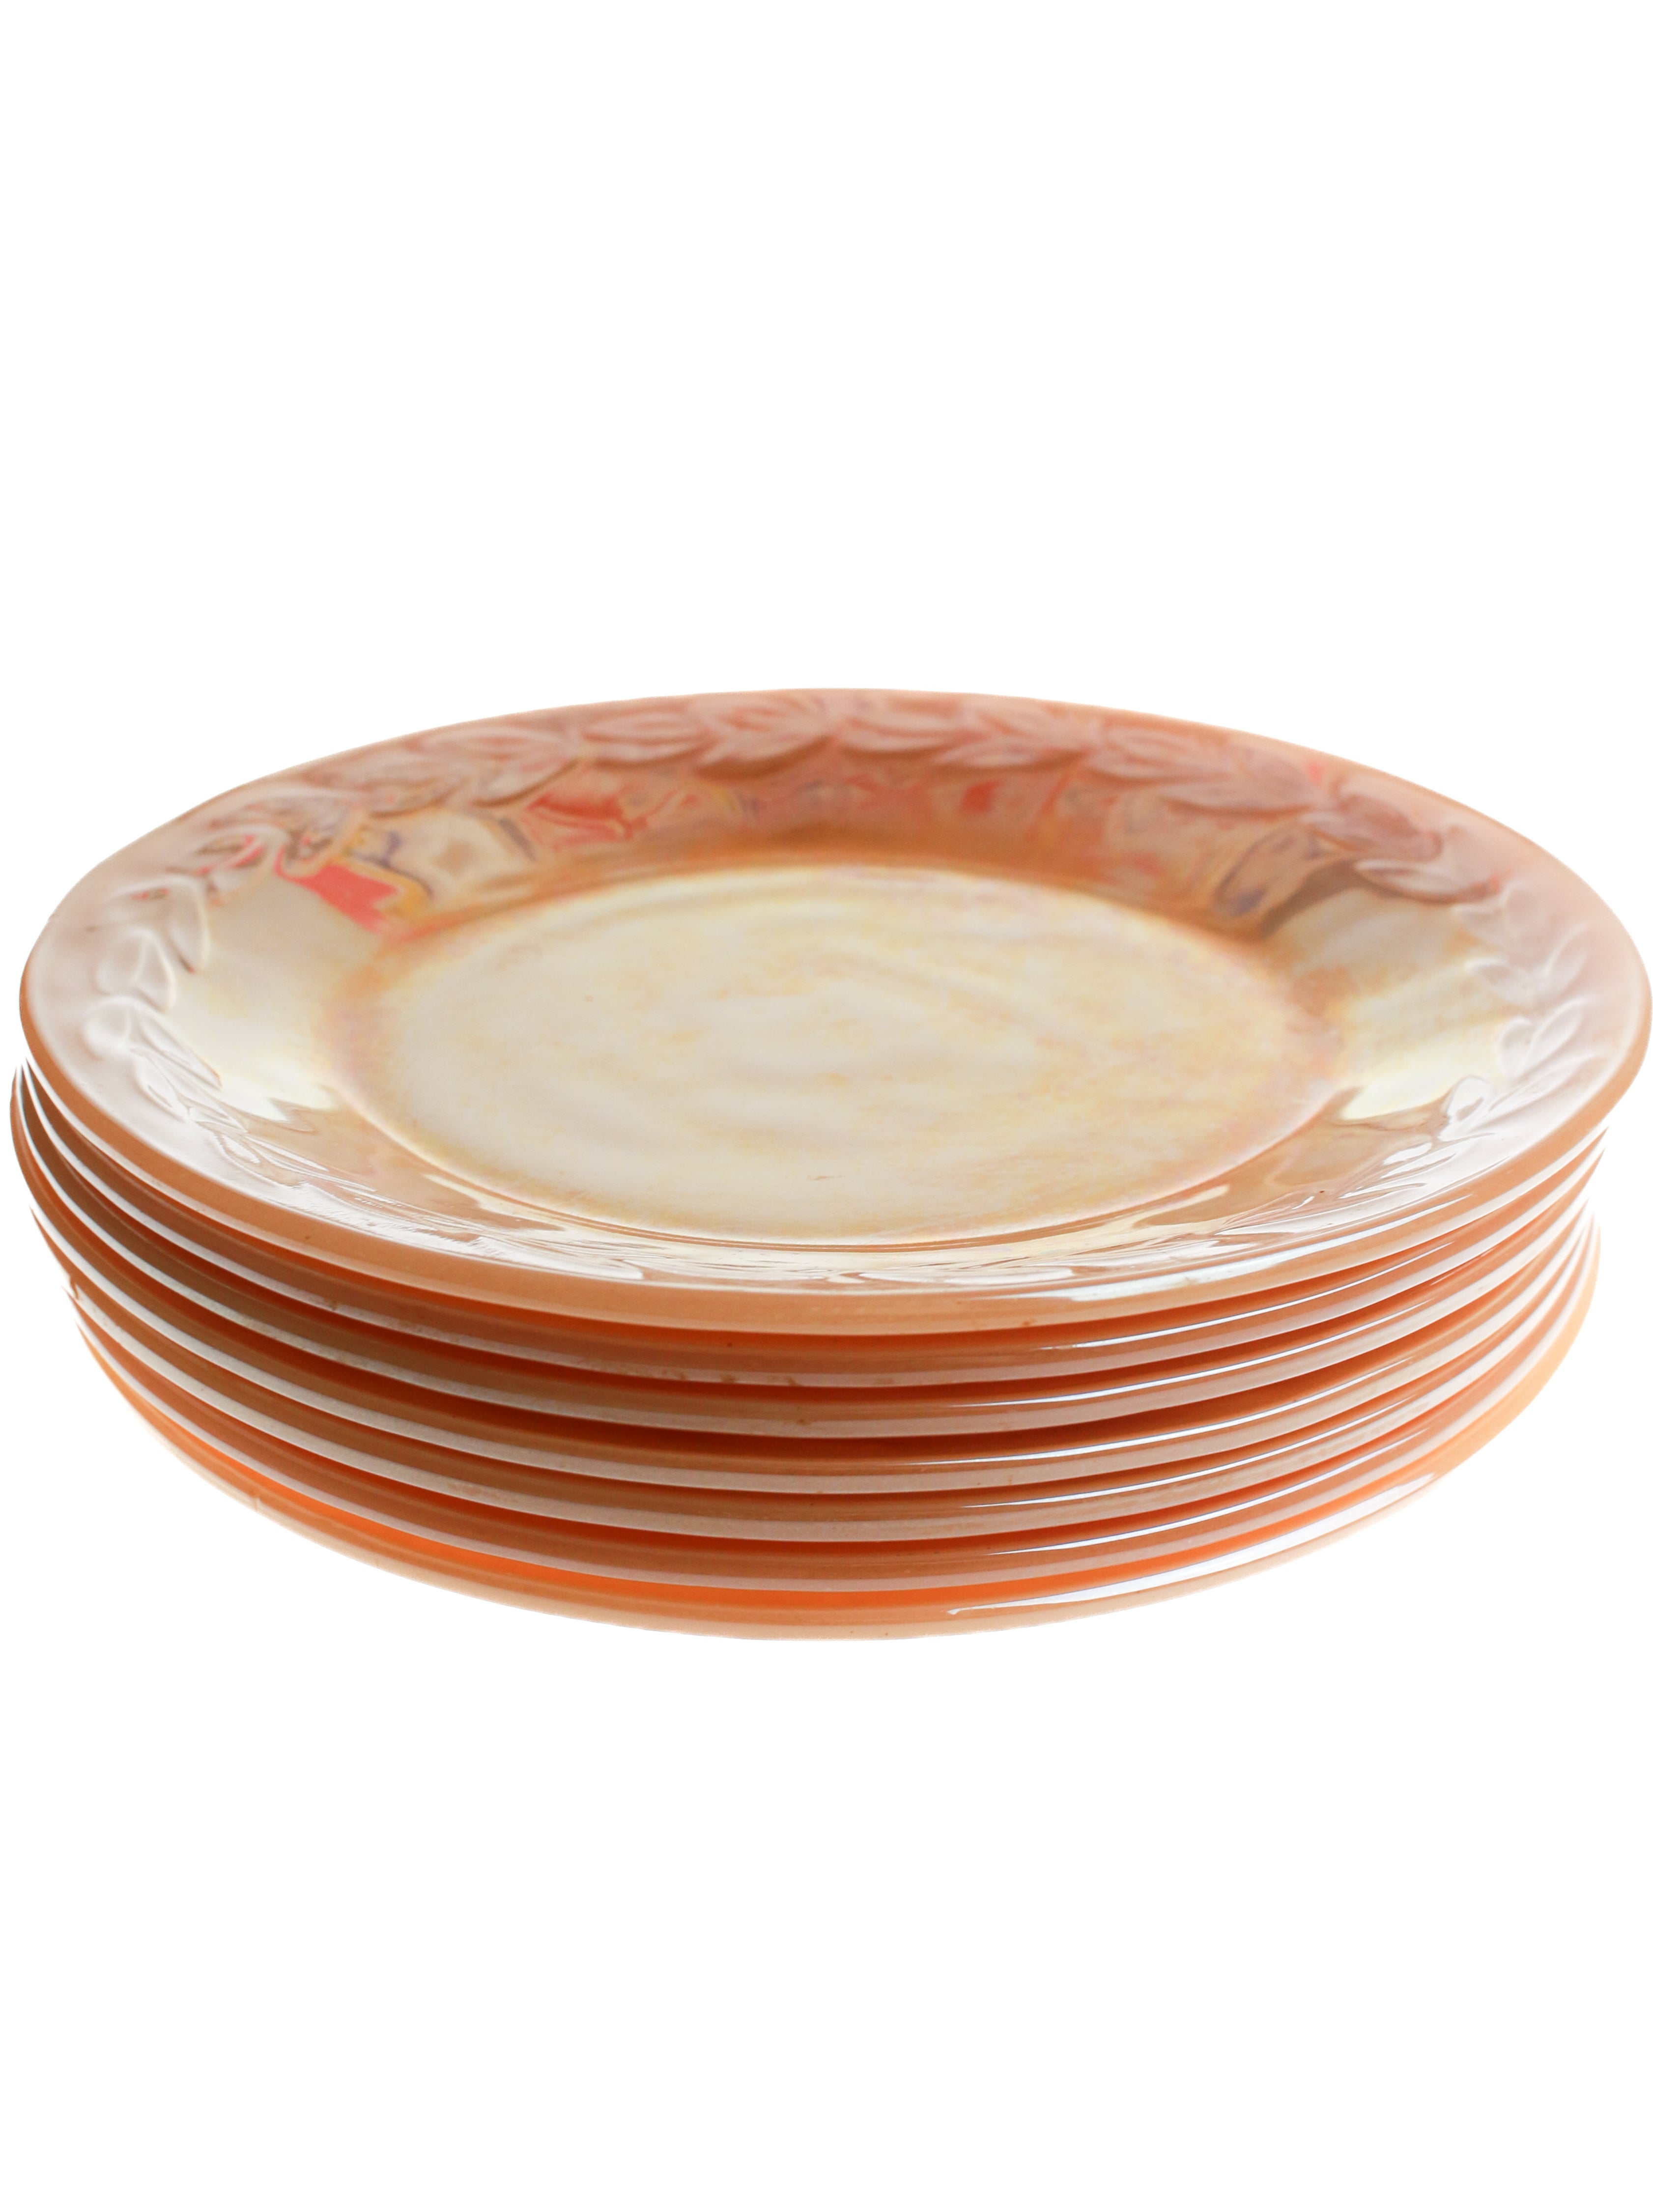 Creamsicle Dinner Plates (Set of 7) | Whit's Vintage Picks